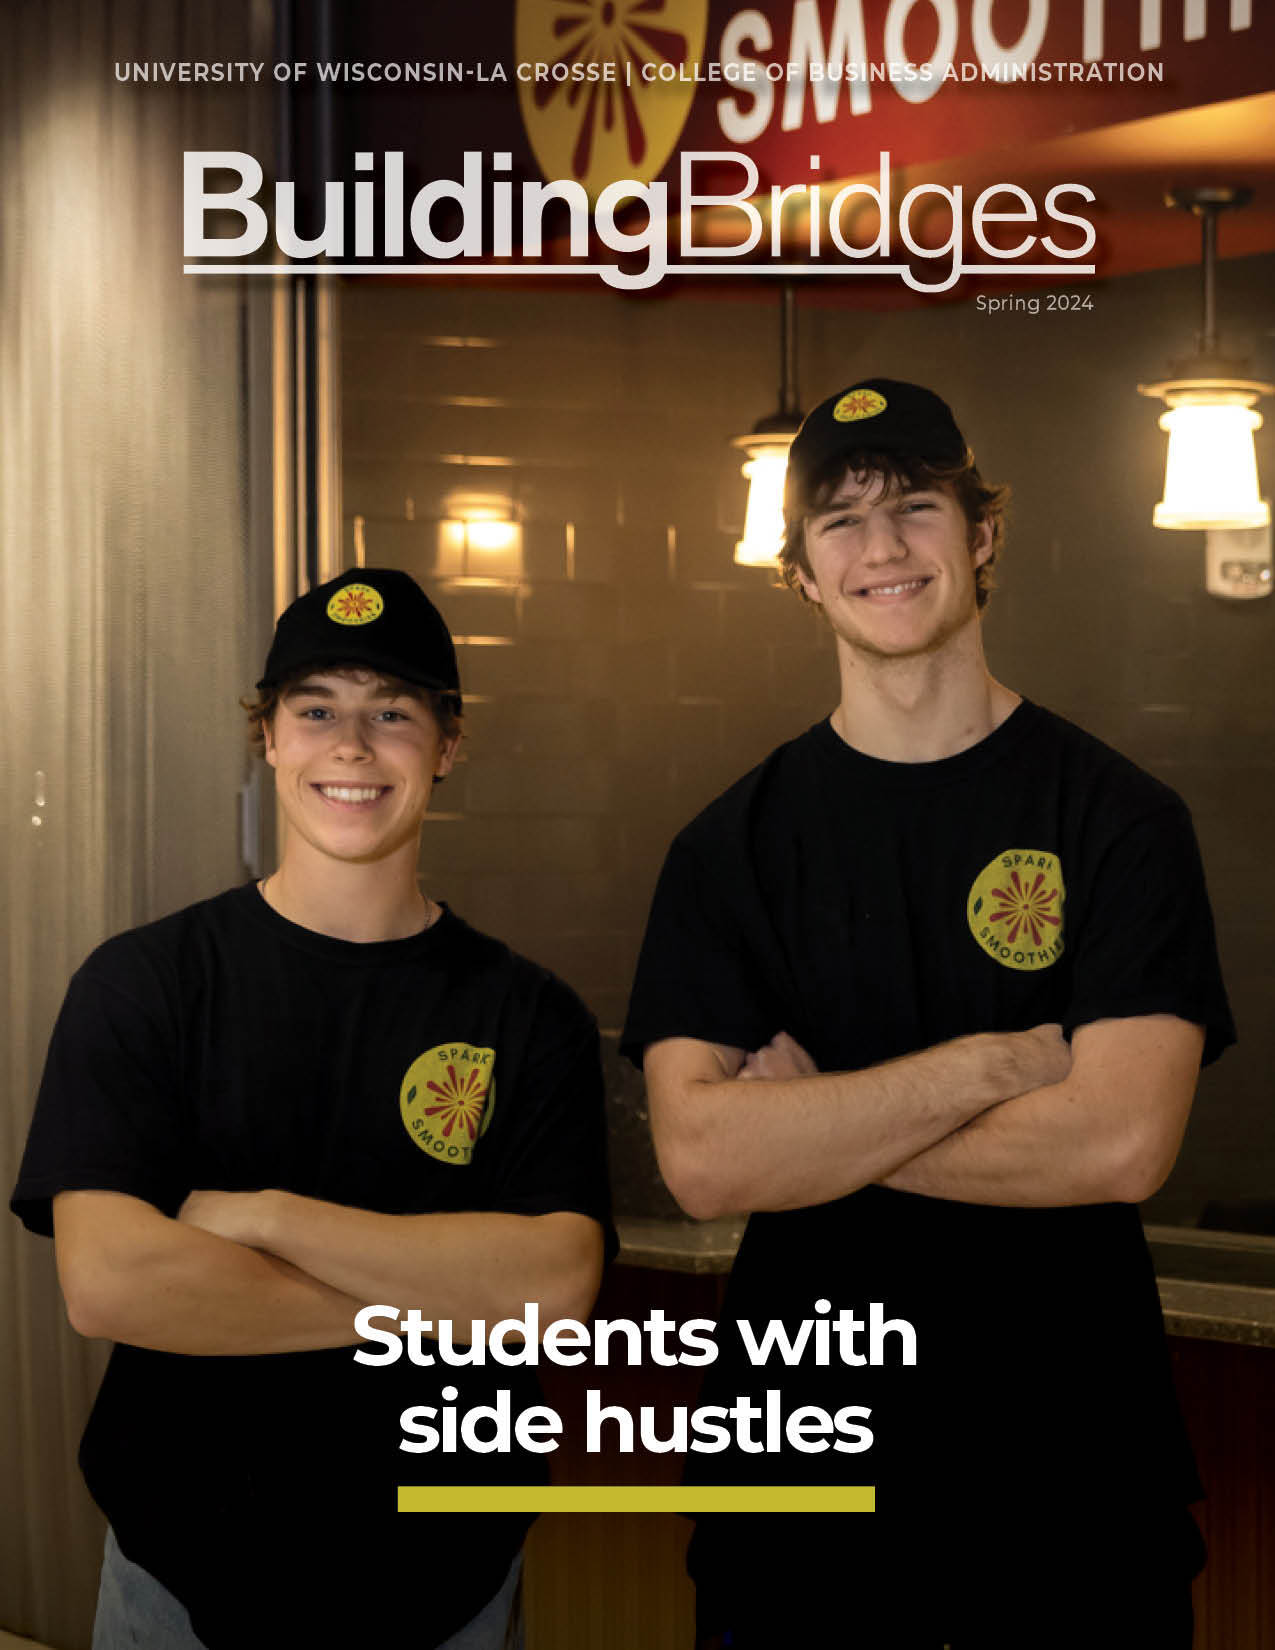 The cover of the Building Bridges magazine